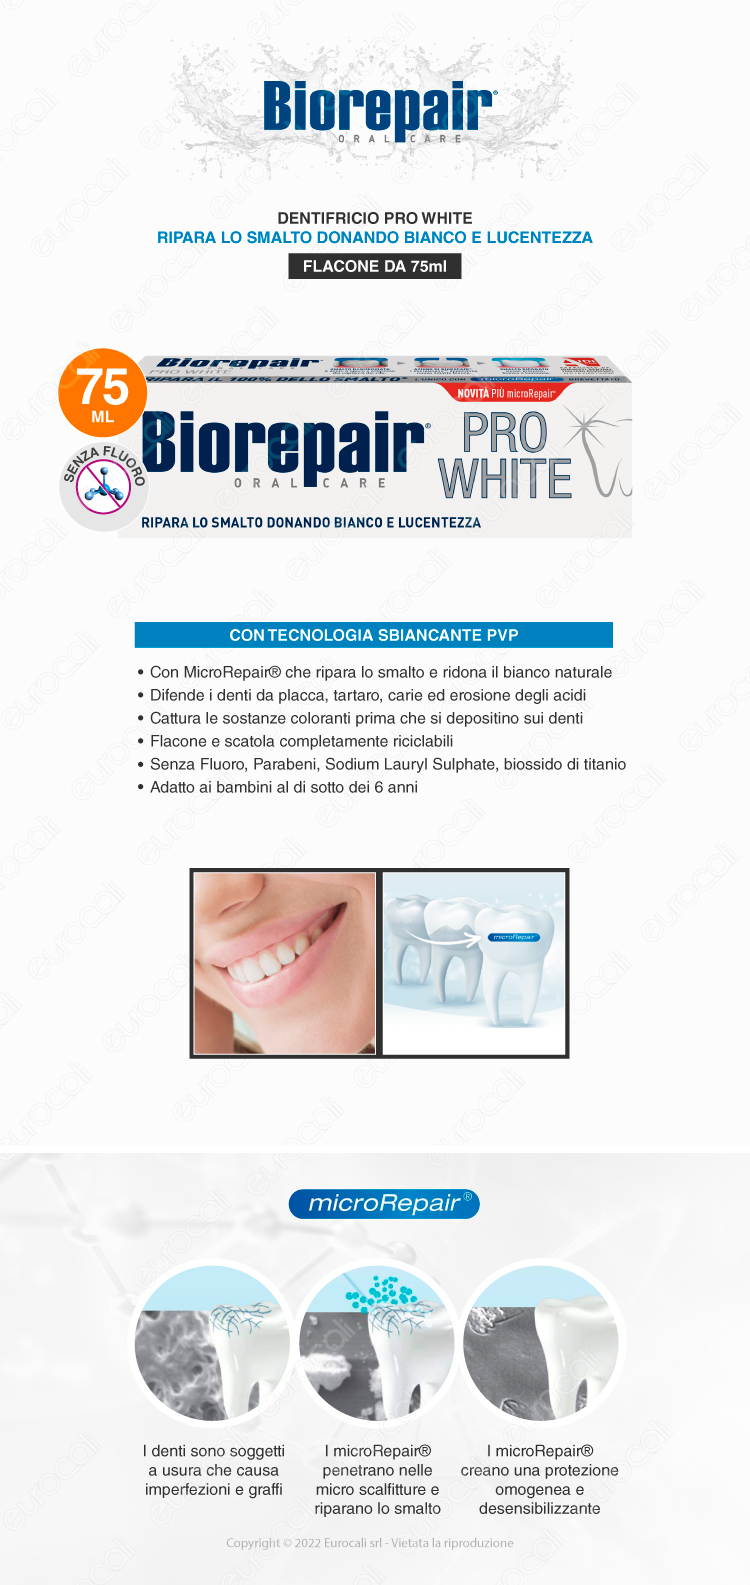 Biorepair dentifricio sbiancante pro white